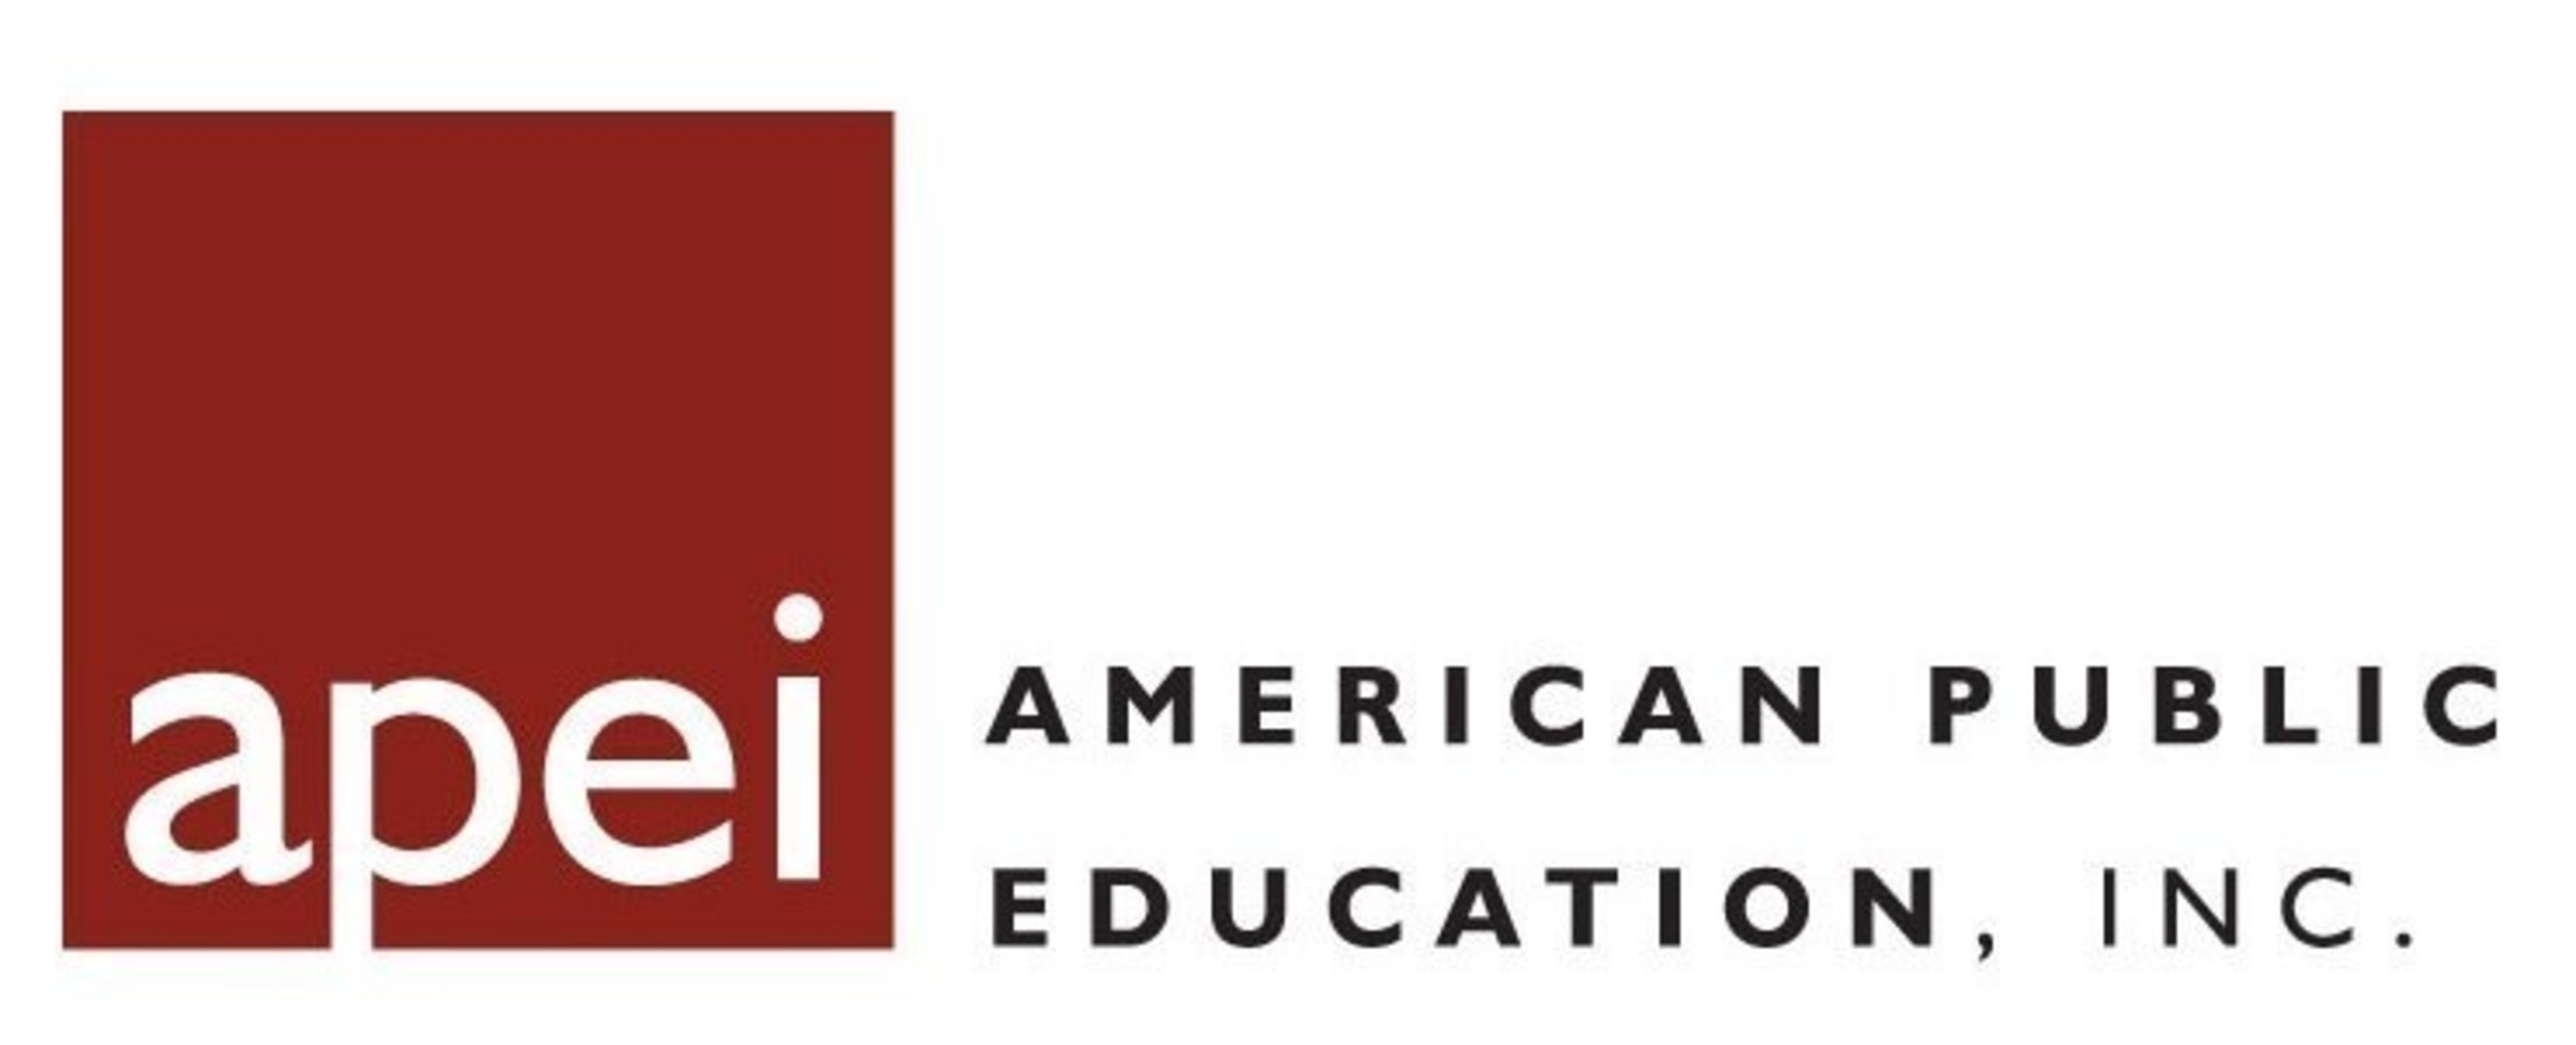 American Public Education, Inc.